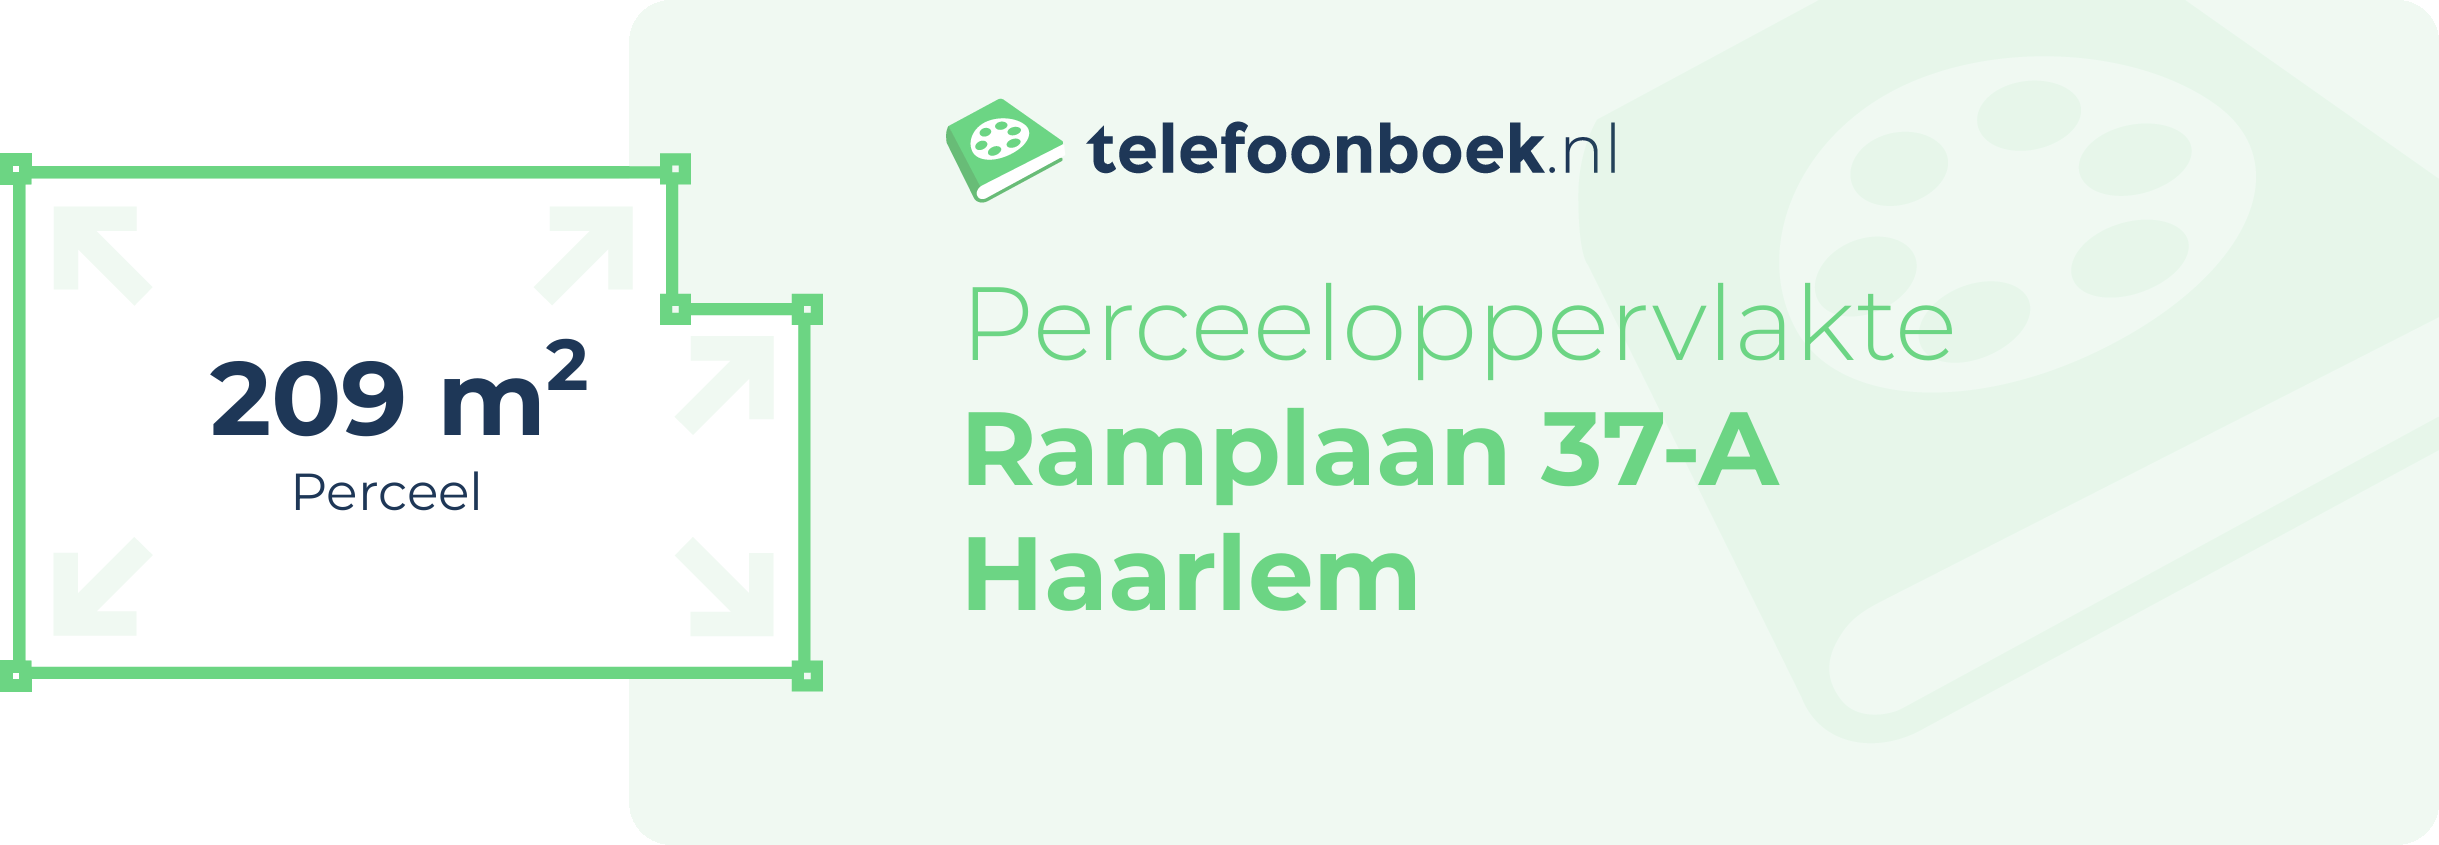 Perceeloppervlakte Ramplaan 37-A Haarlem